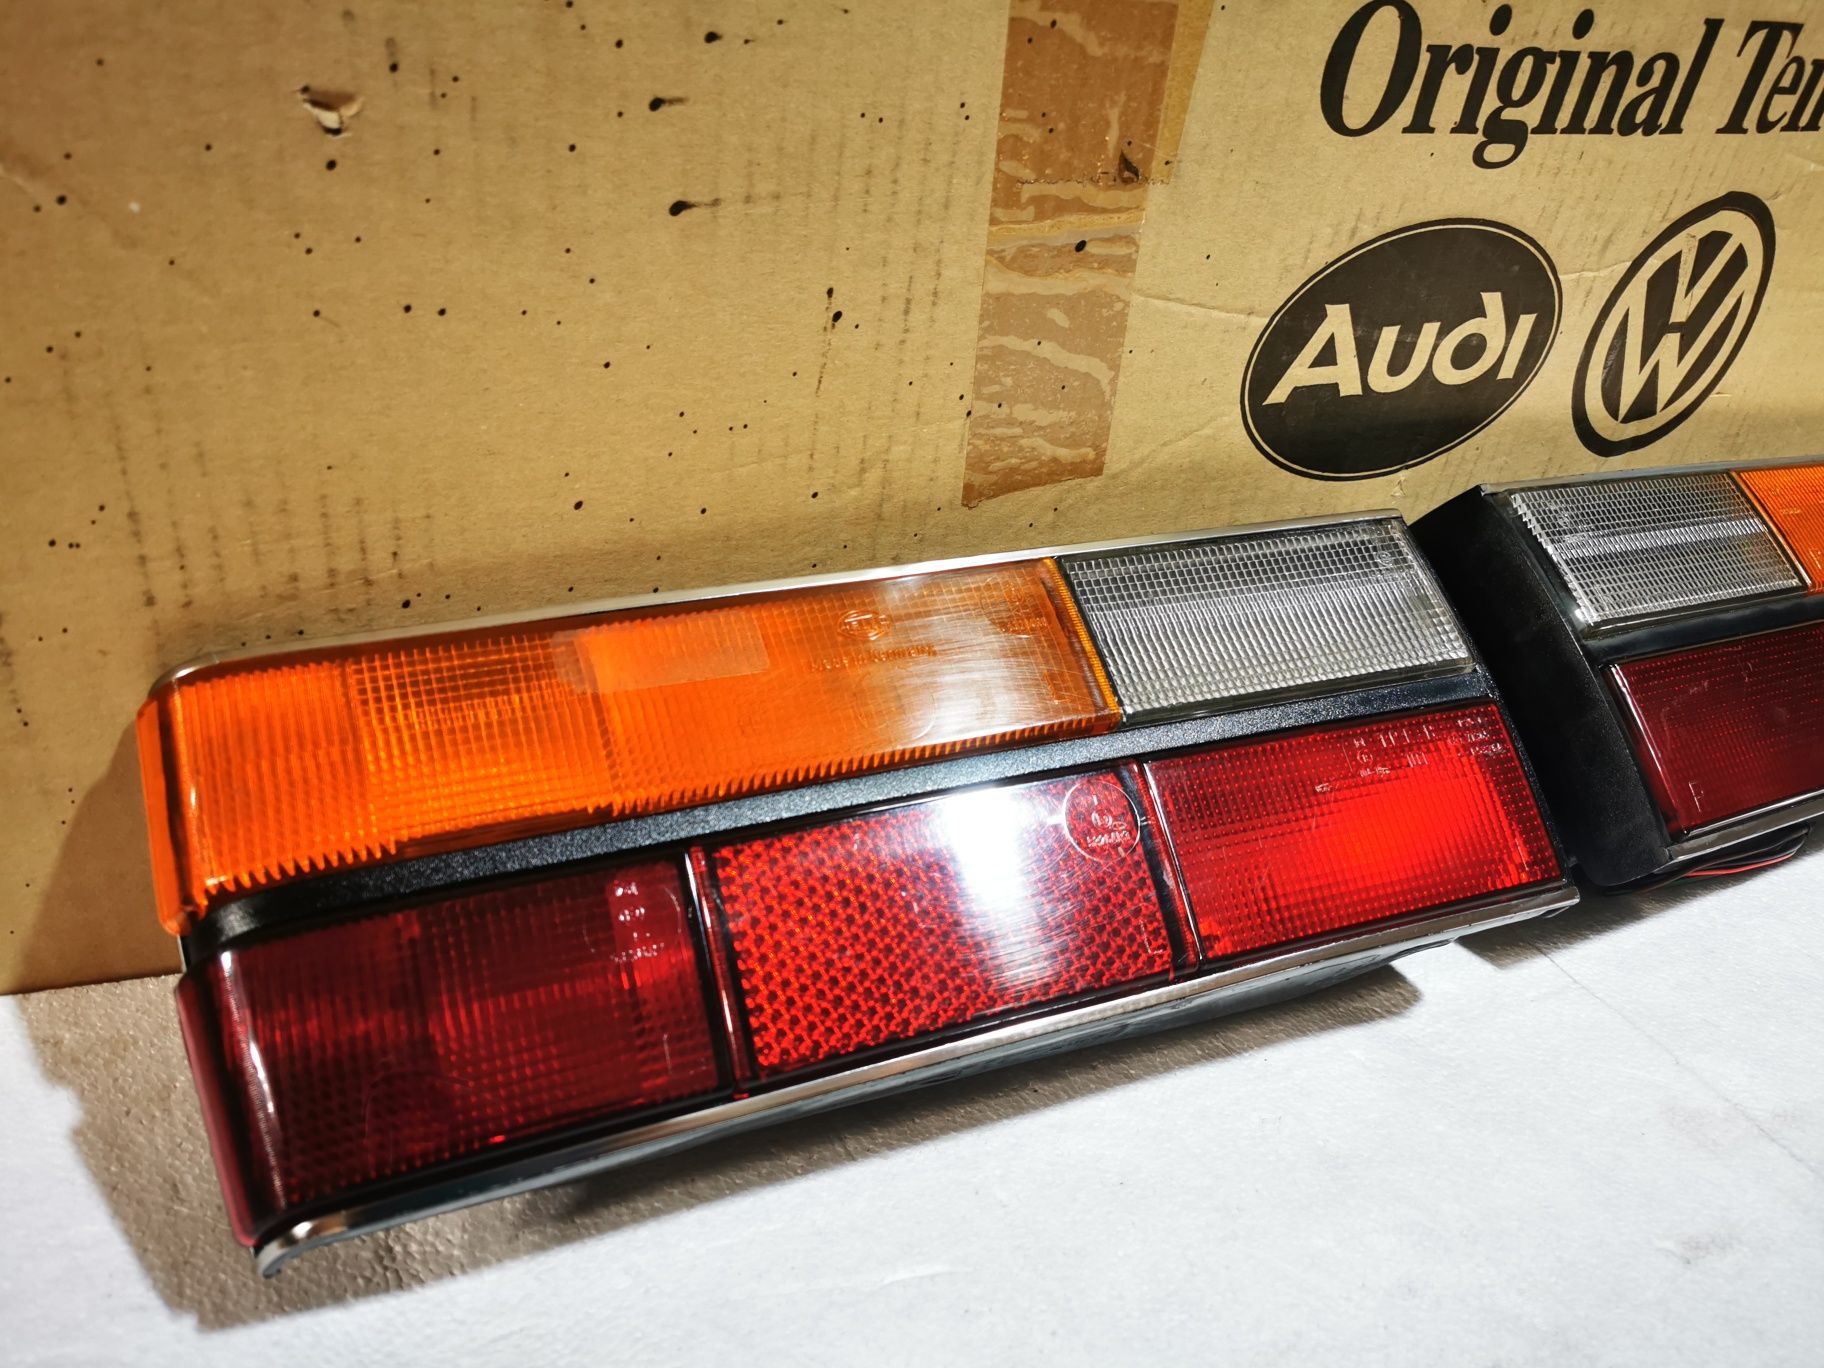 Set stopuri originale Hella Audi 100 C2 1976 - 1982
Stare buna